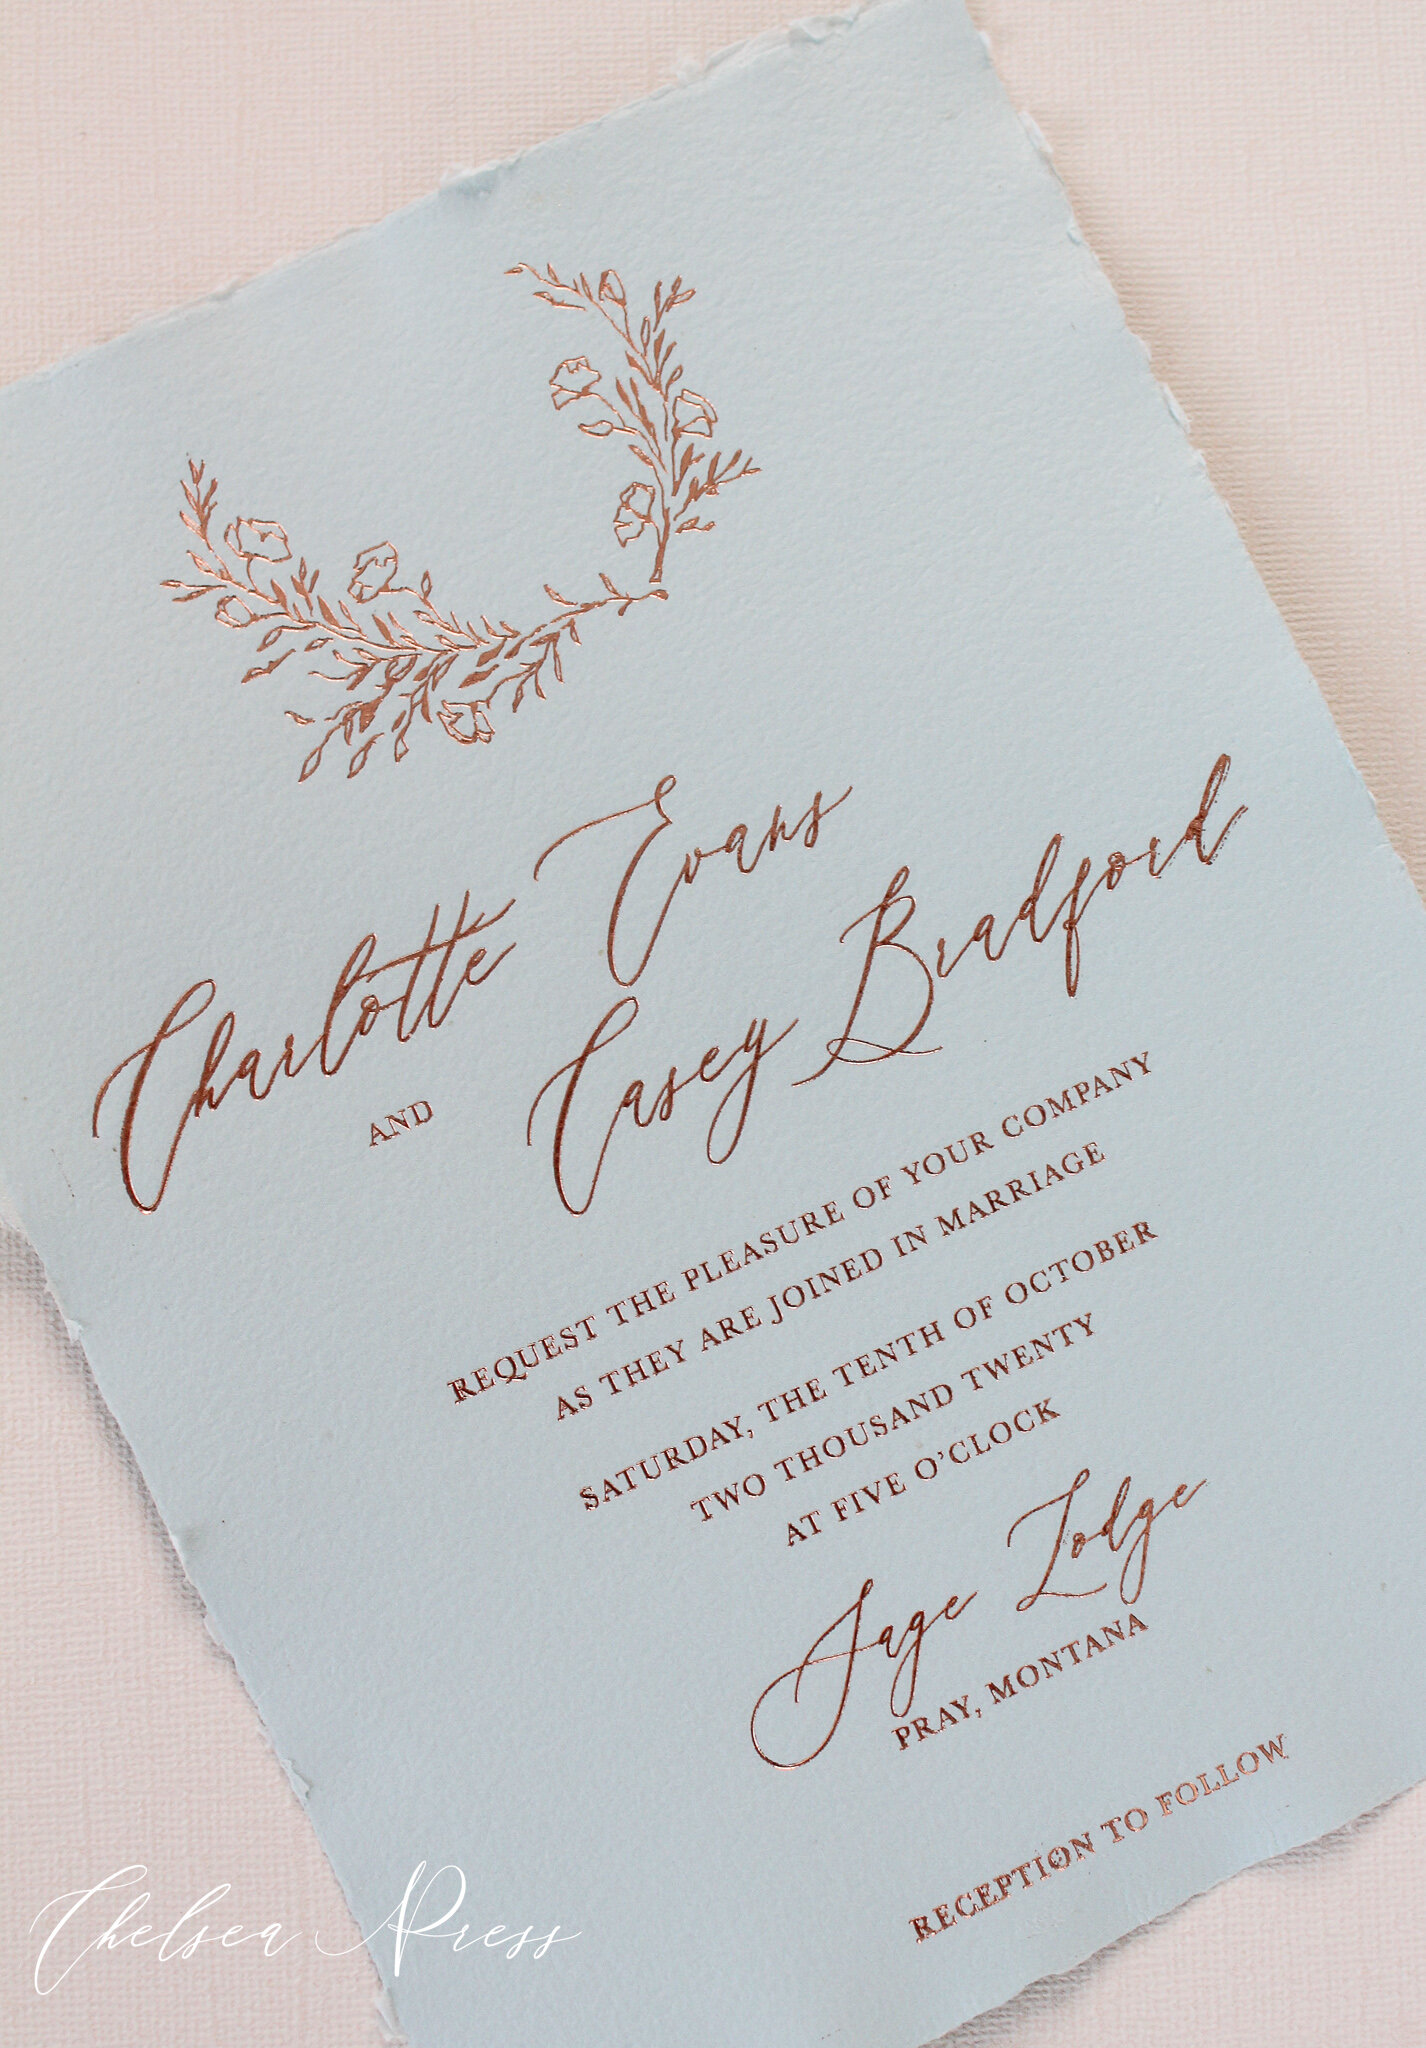 Chelsea Press Invitations-Charlotte and Casey wedding invitation.jpg